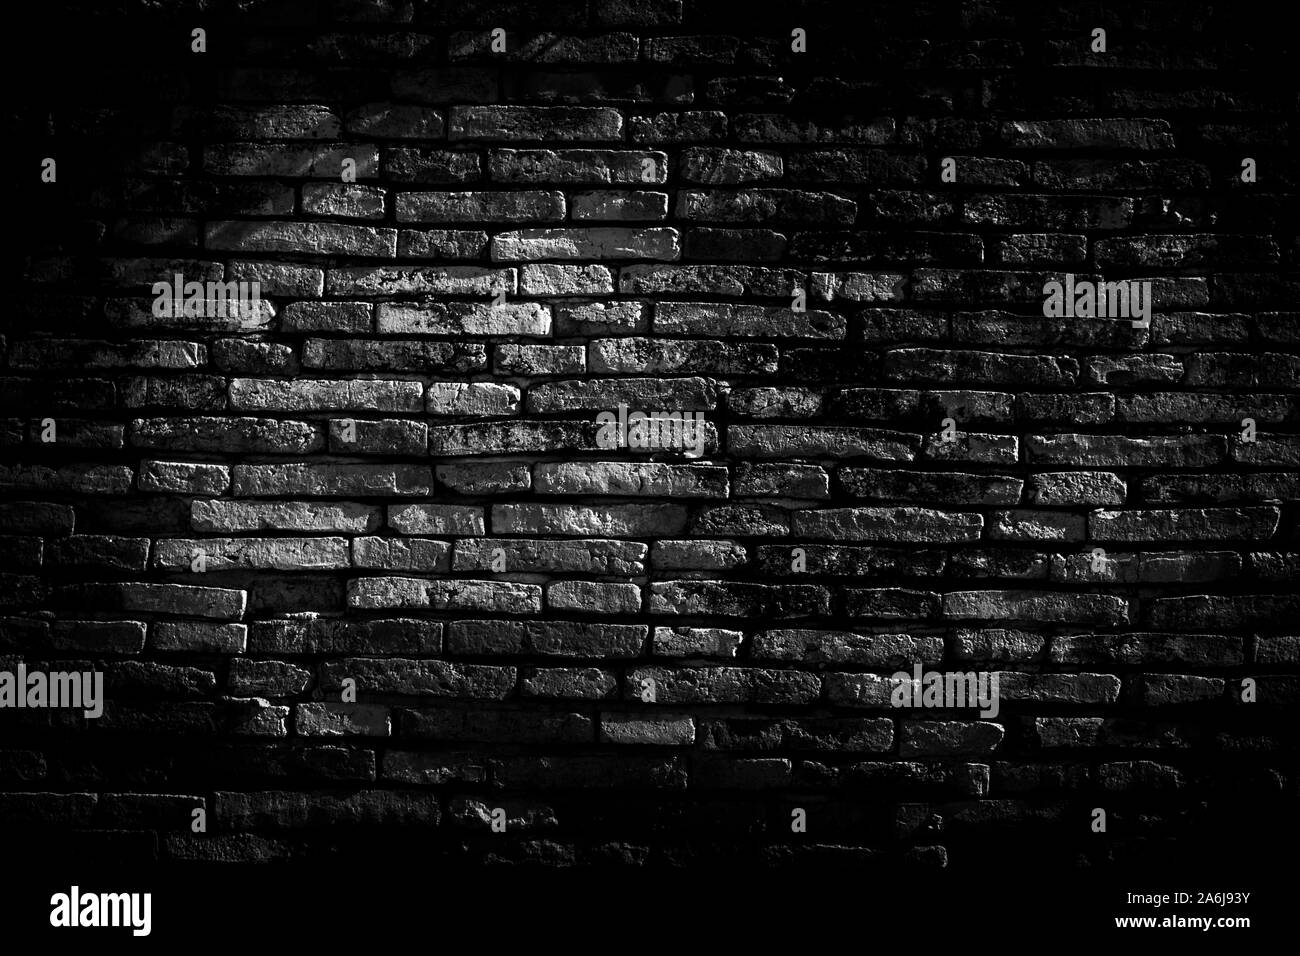 Black Brick Walls Background And Texture The Texture Of The Brick Is Black Background Of Empty Brick Basement Wall Black Wall Stock Photo Alamy